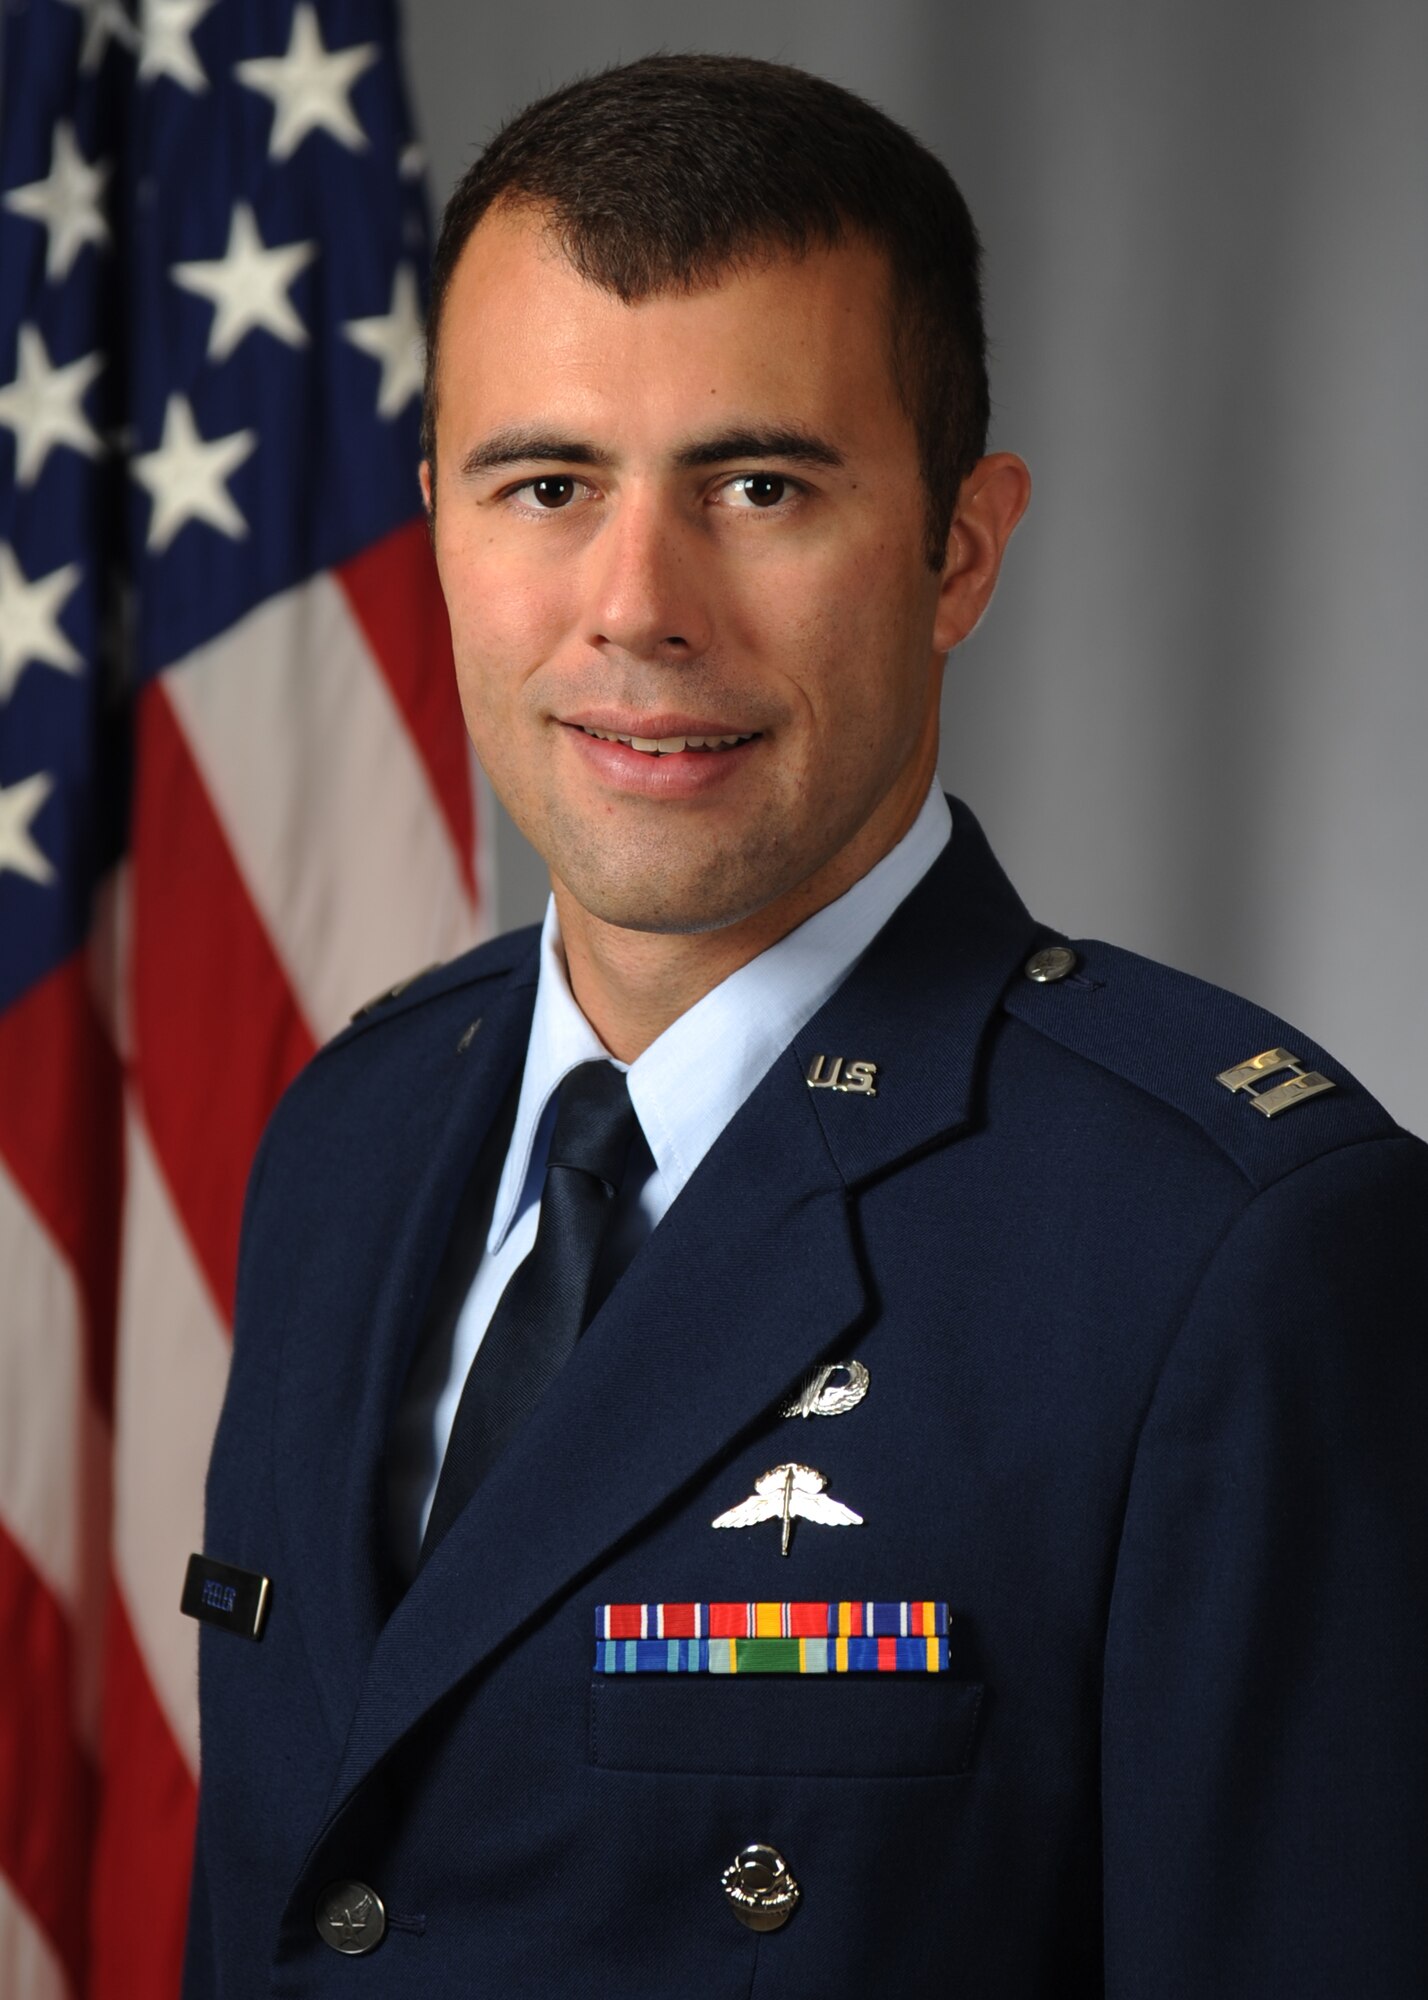 U.S. Air Force Capt. Nate Peeler Official Photo